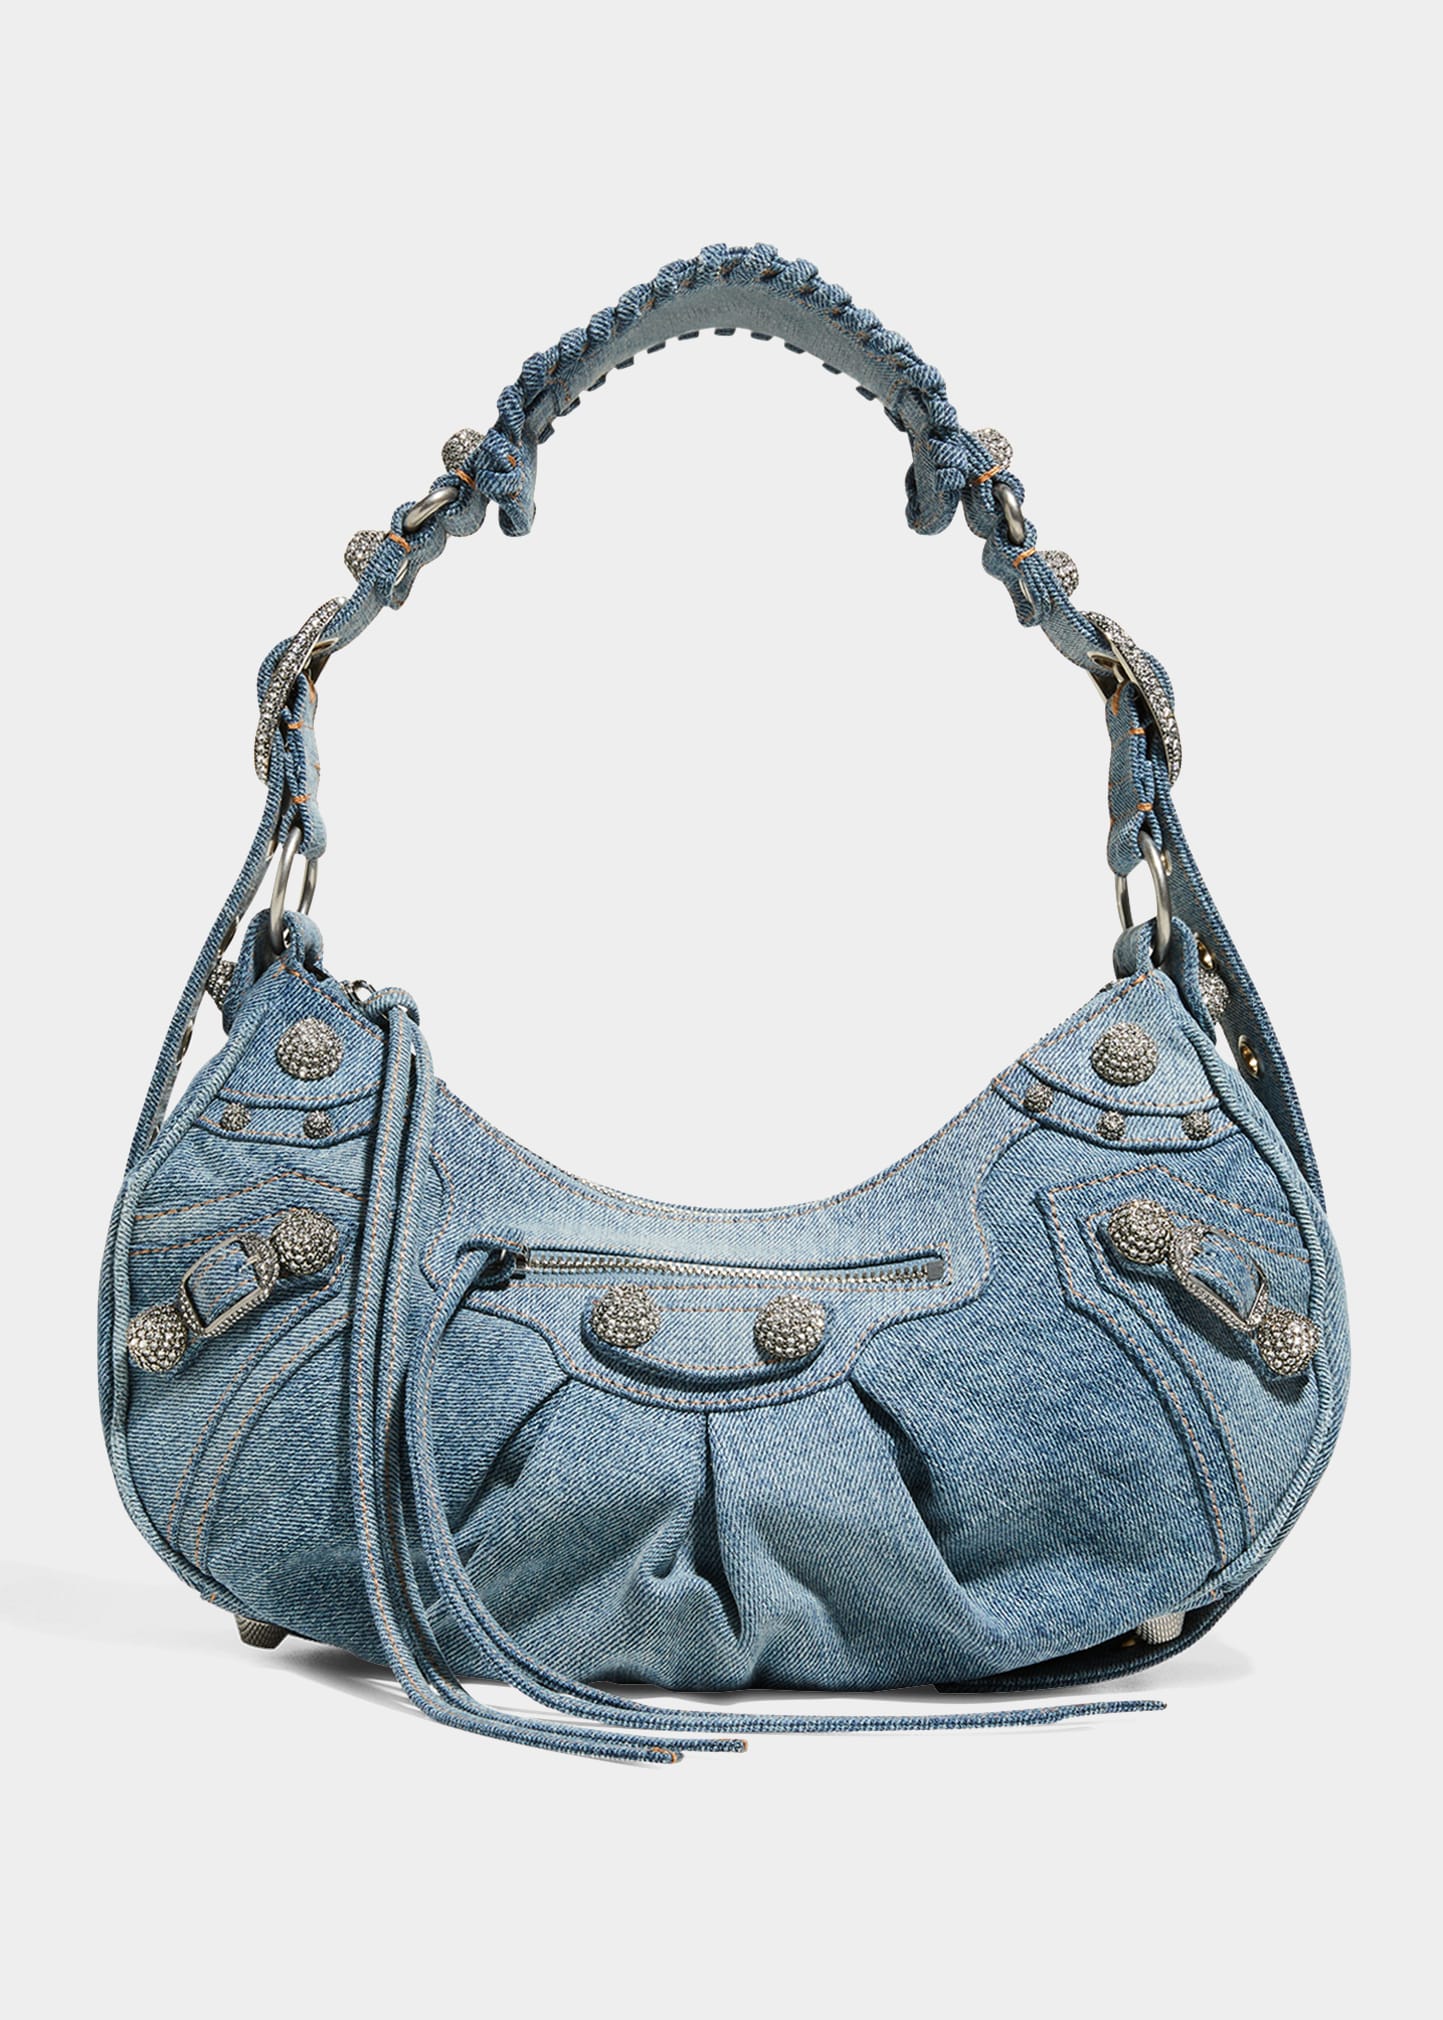 BALENCIAGA Shoulder Bags On Sale, Up To 70% Off | ModeSens